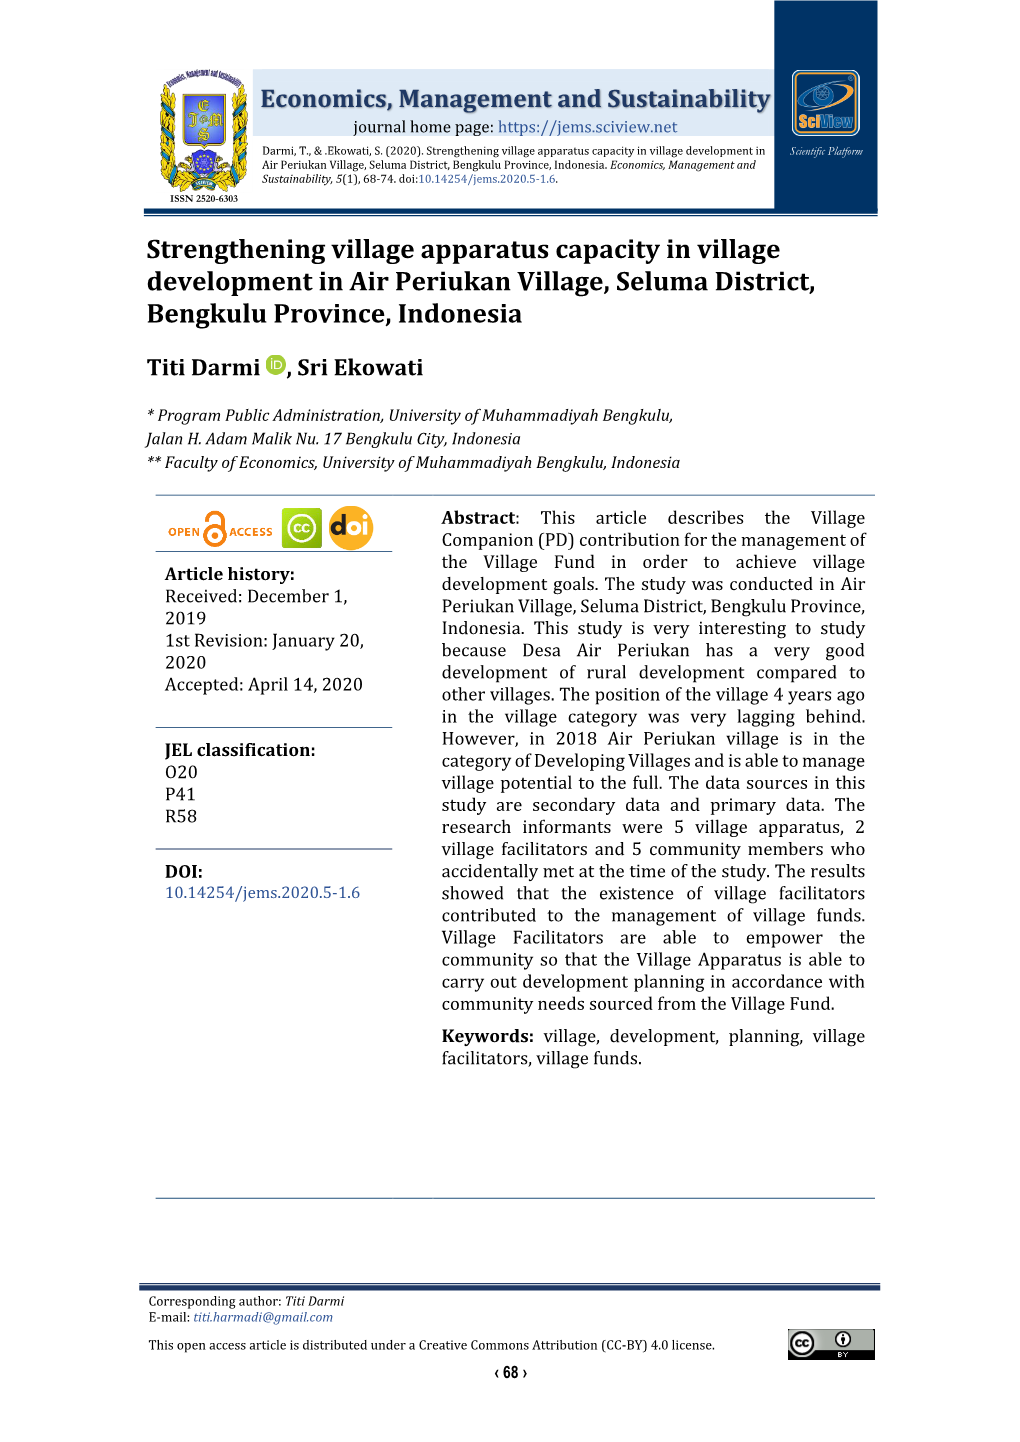 Strengthening Village Apparatus Capacity in Village Development in Scientific Platform Air Periukan Village, Seluma District, Bengkulu Province, Indonesia